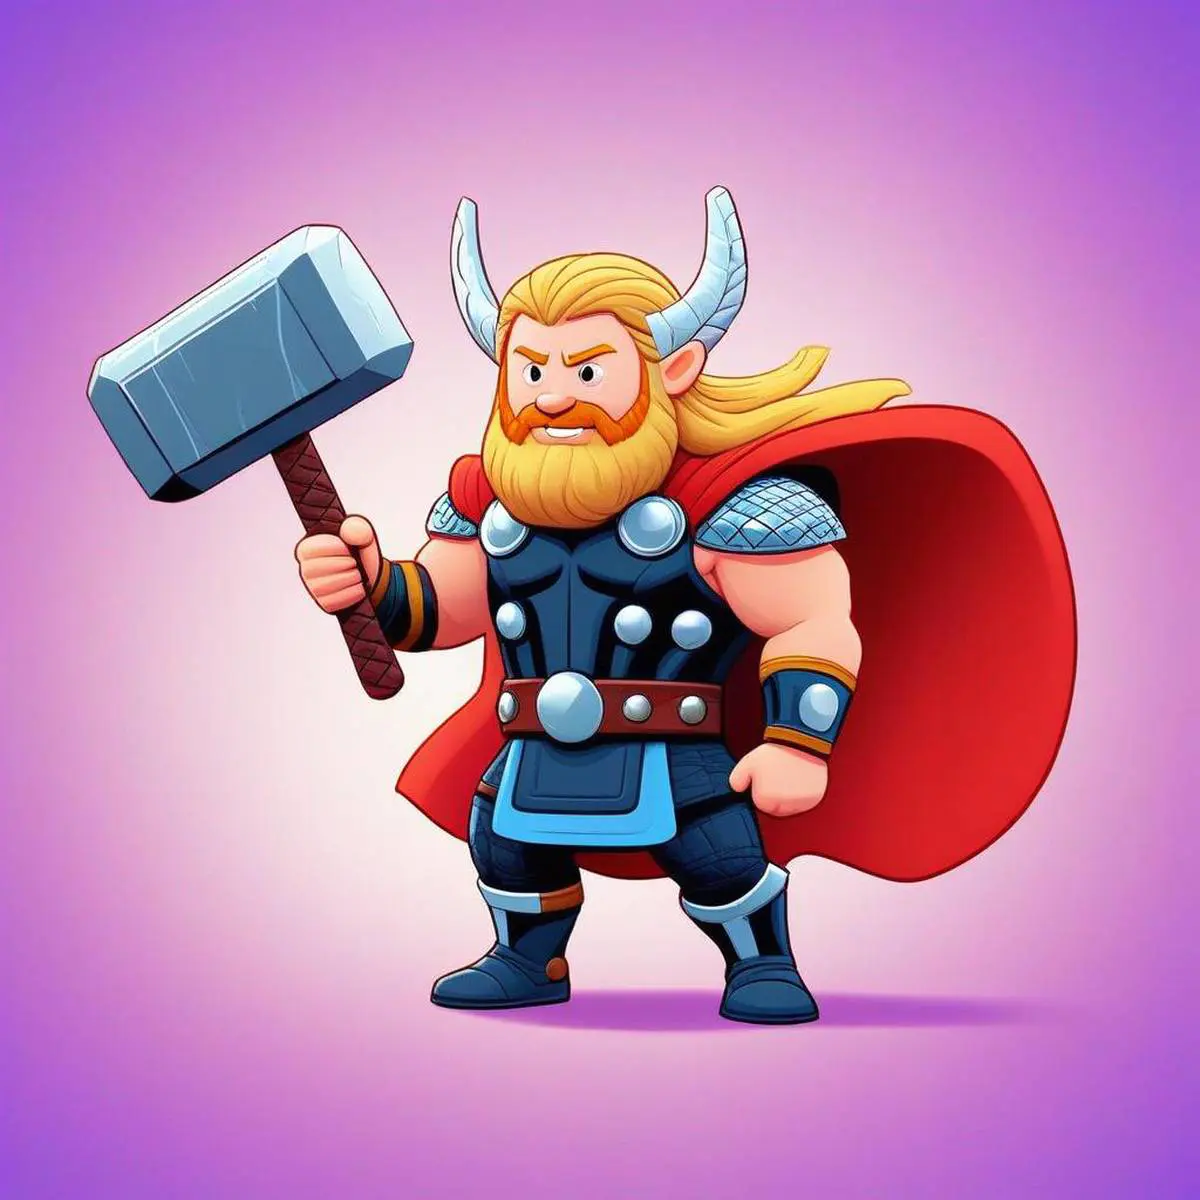 Thor puns